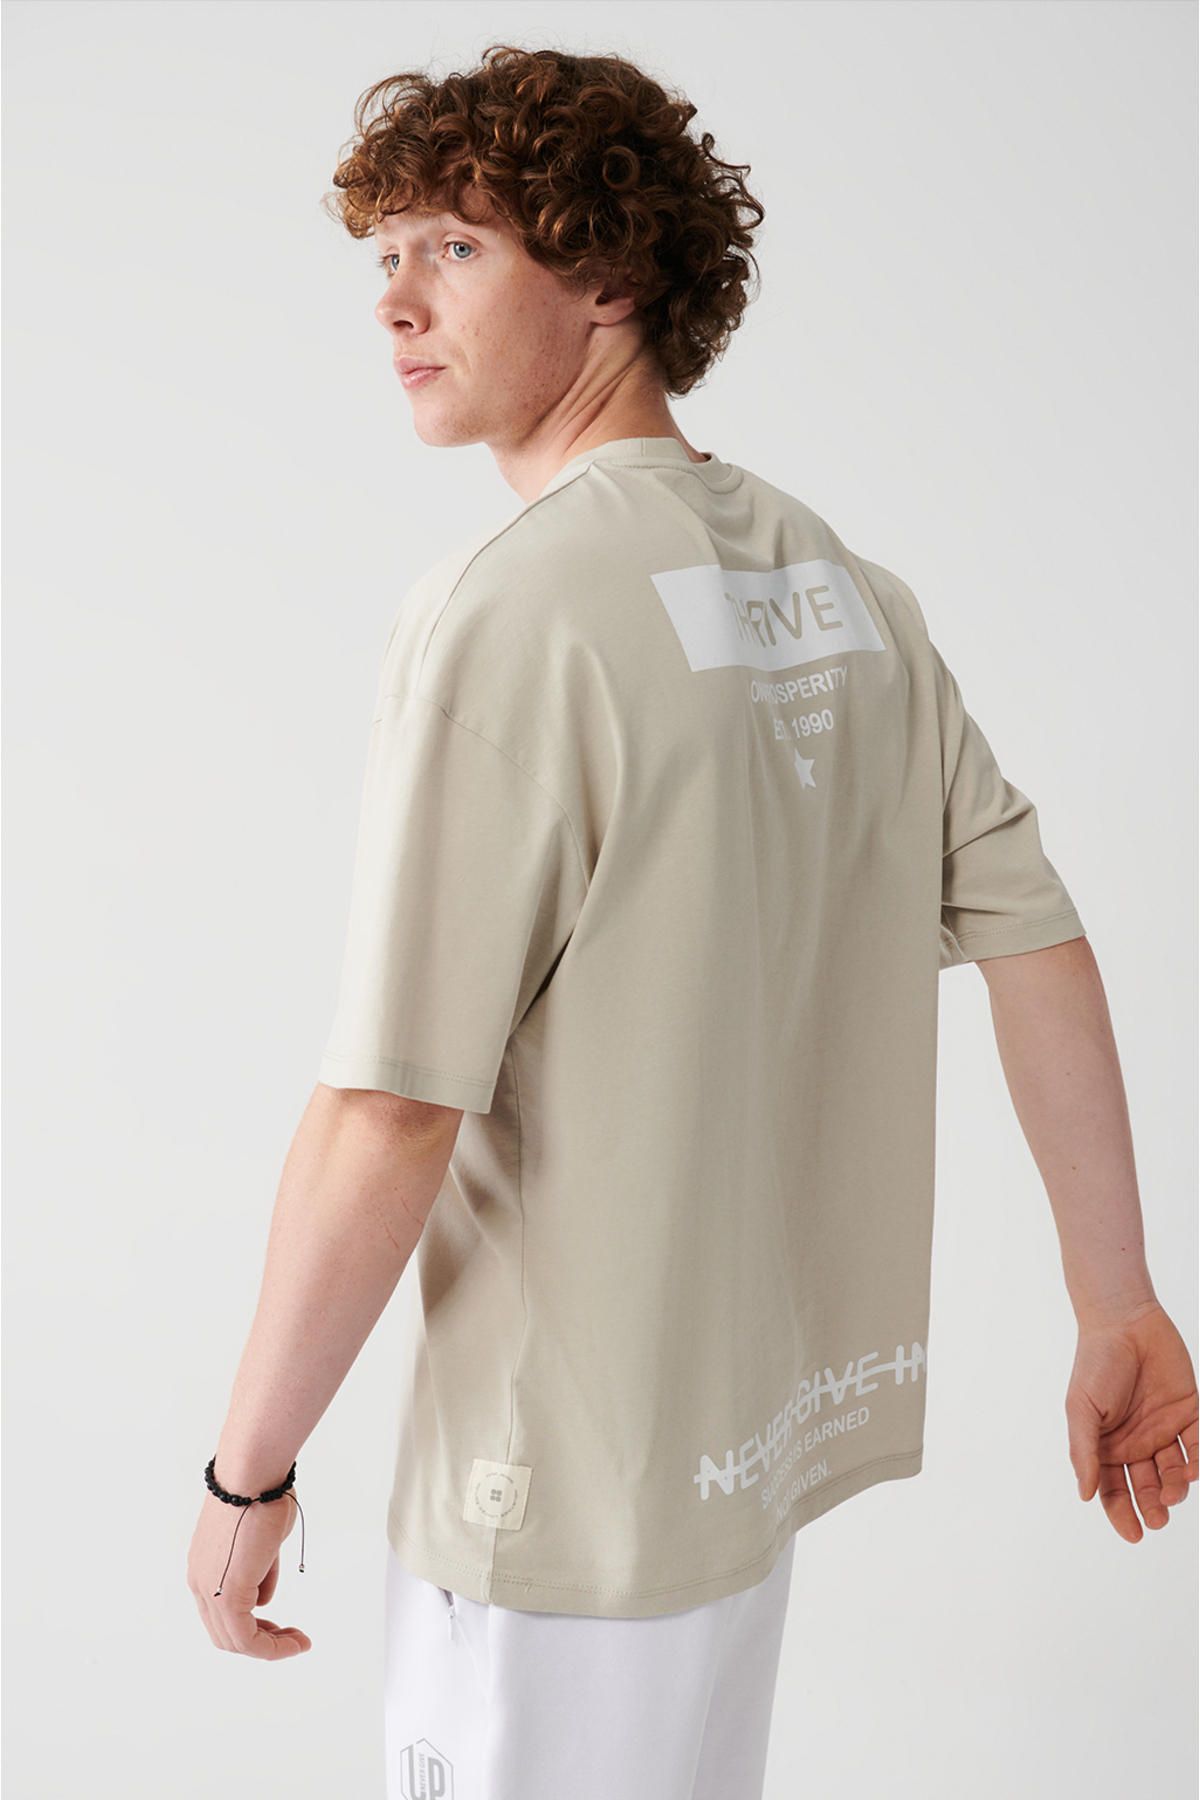 Avva Men's Beige Oversize 100% Cotton Crew Neck Front And Back Printed T-shirt